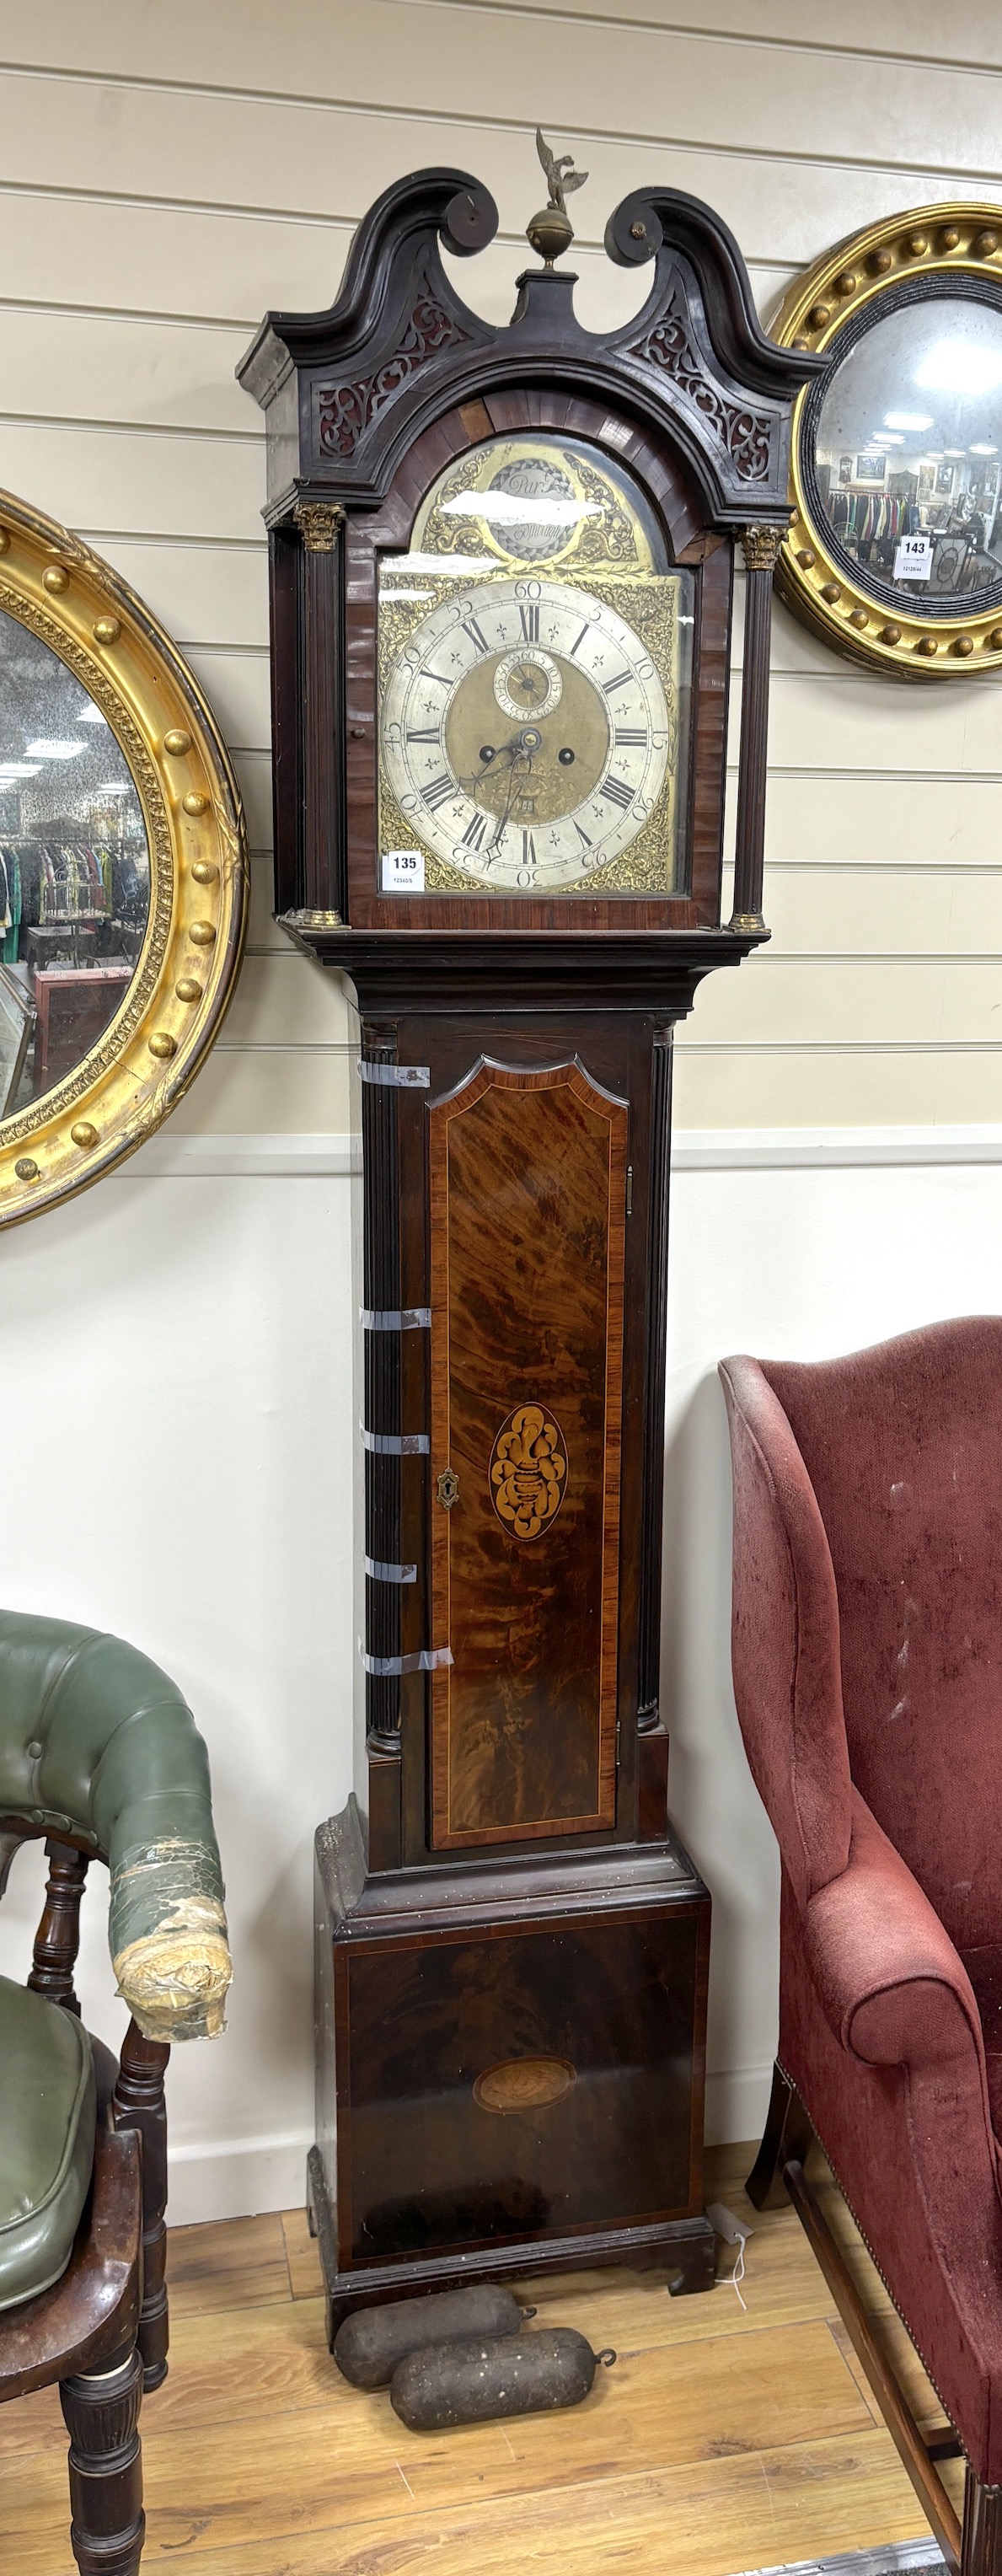 A George III inlaid mahogany longcase clock, marked Patrick Gordon, Edinburgh, height 224cm